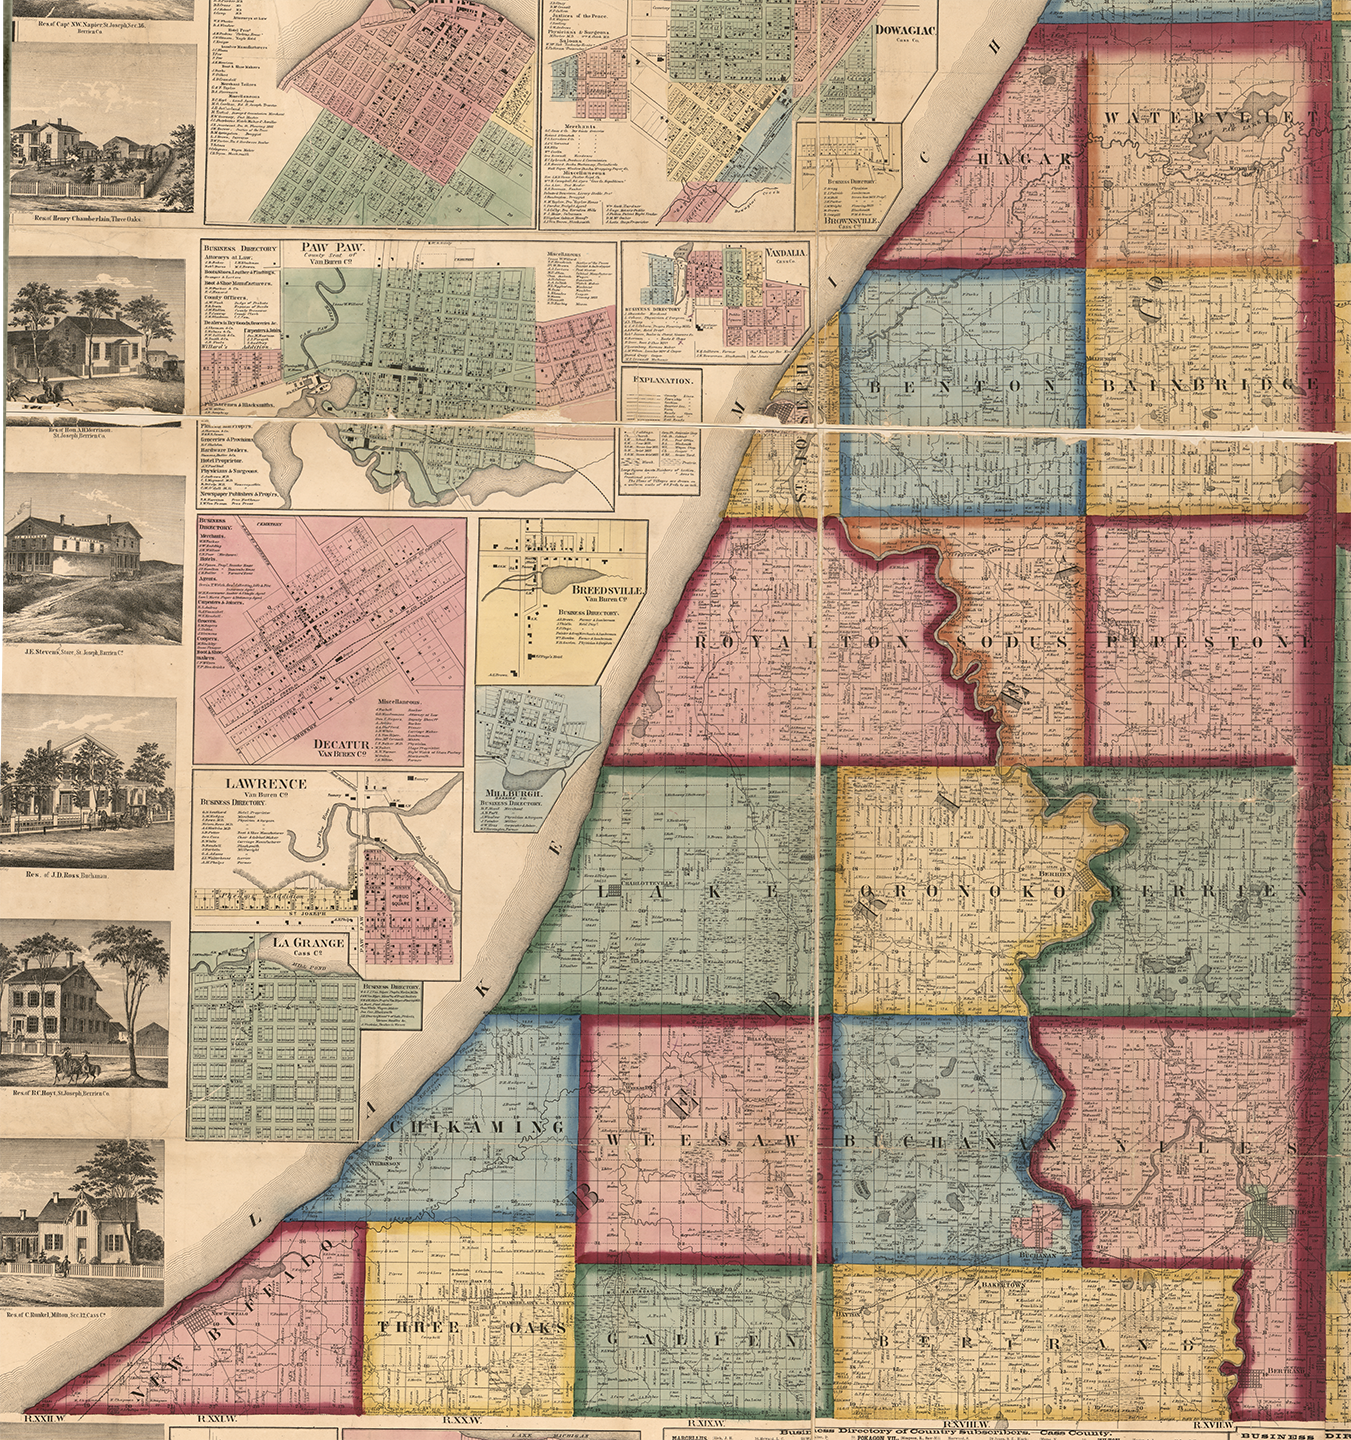 1860 Berrien County Michigan landownership map